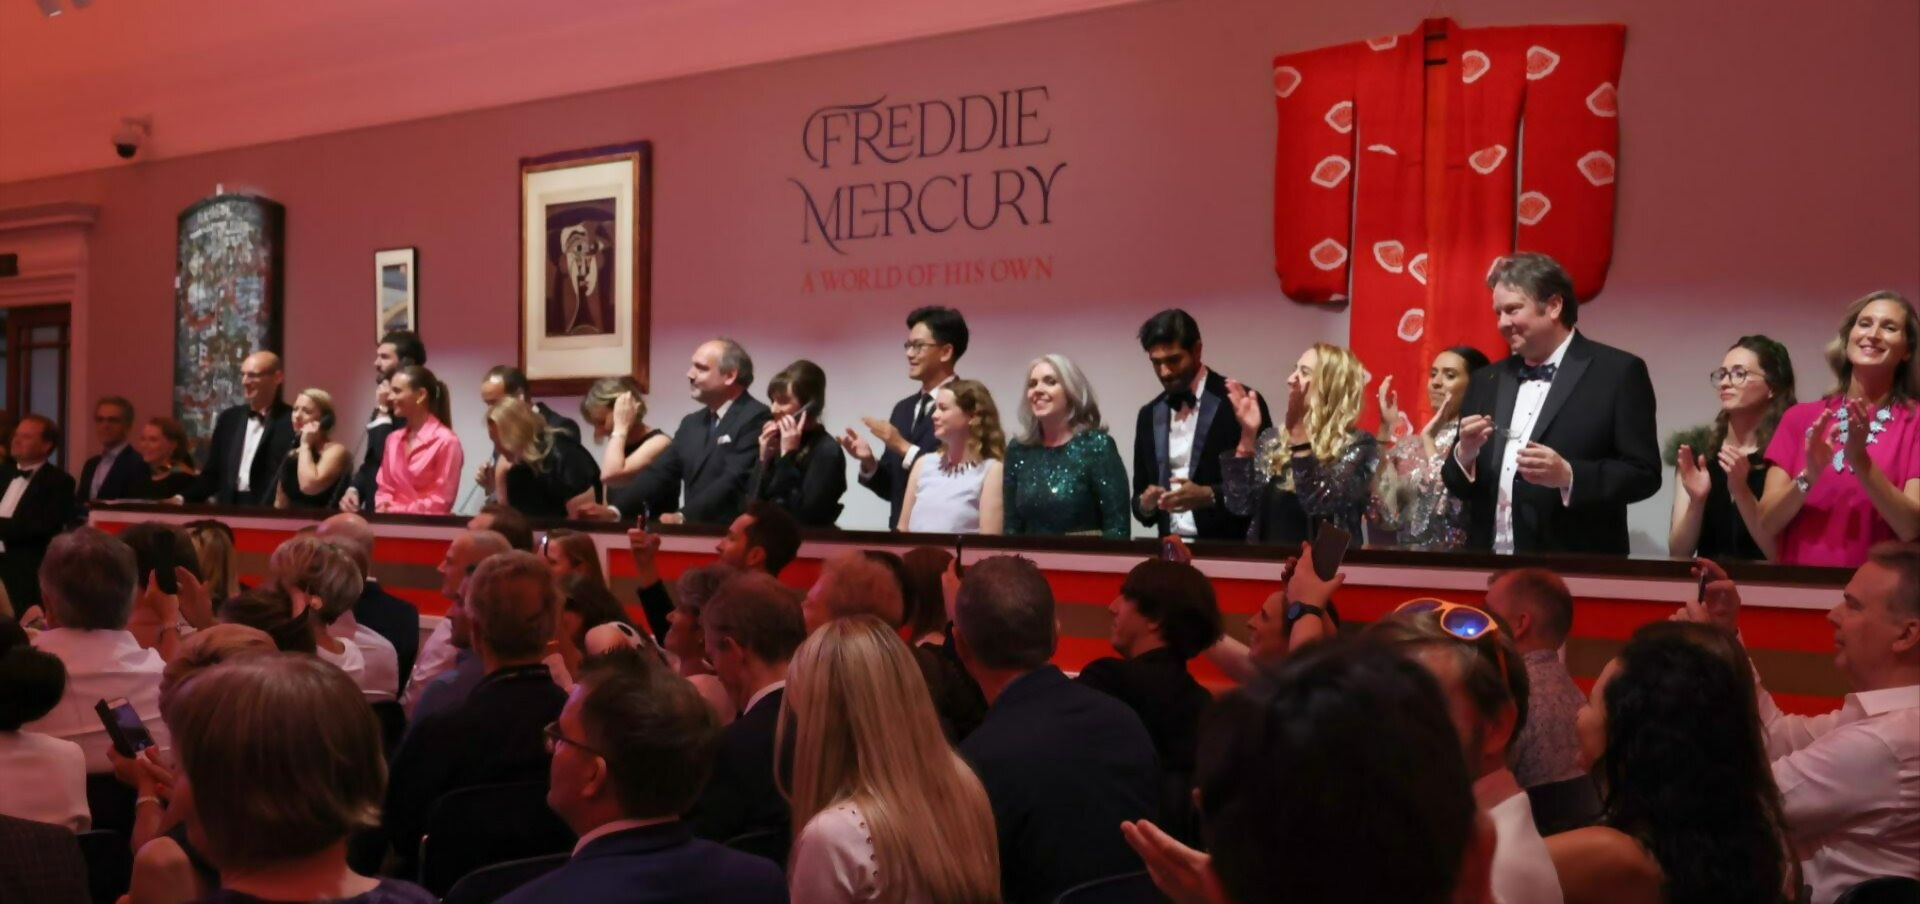 Freddie Mercury Sotheby's auction